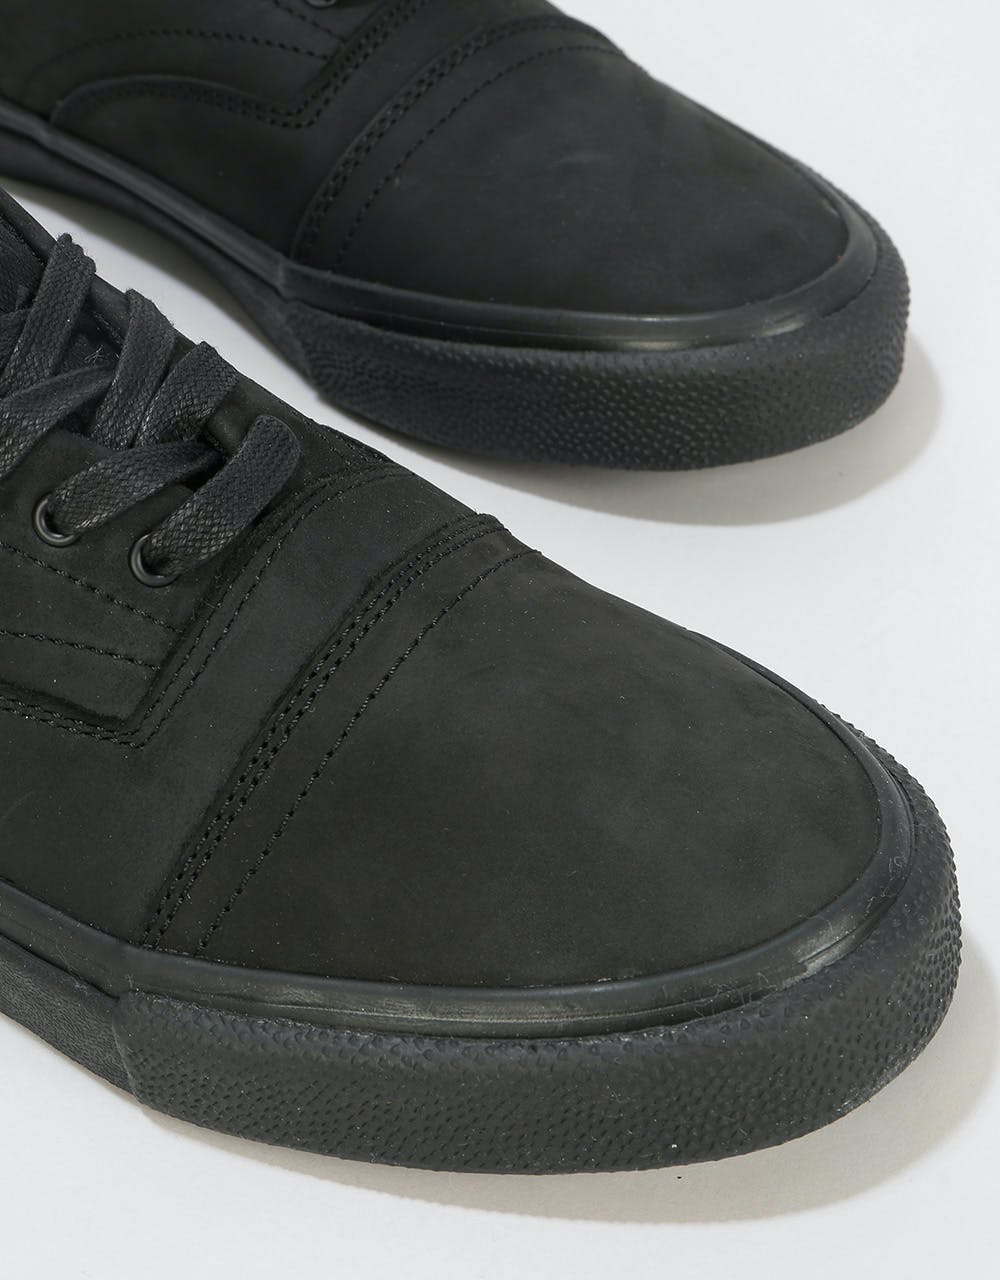 Emerica Provider Skate Shoes - Black/Black/Black